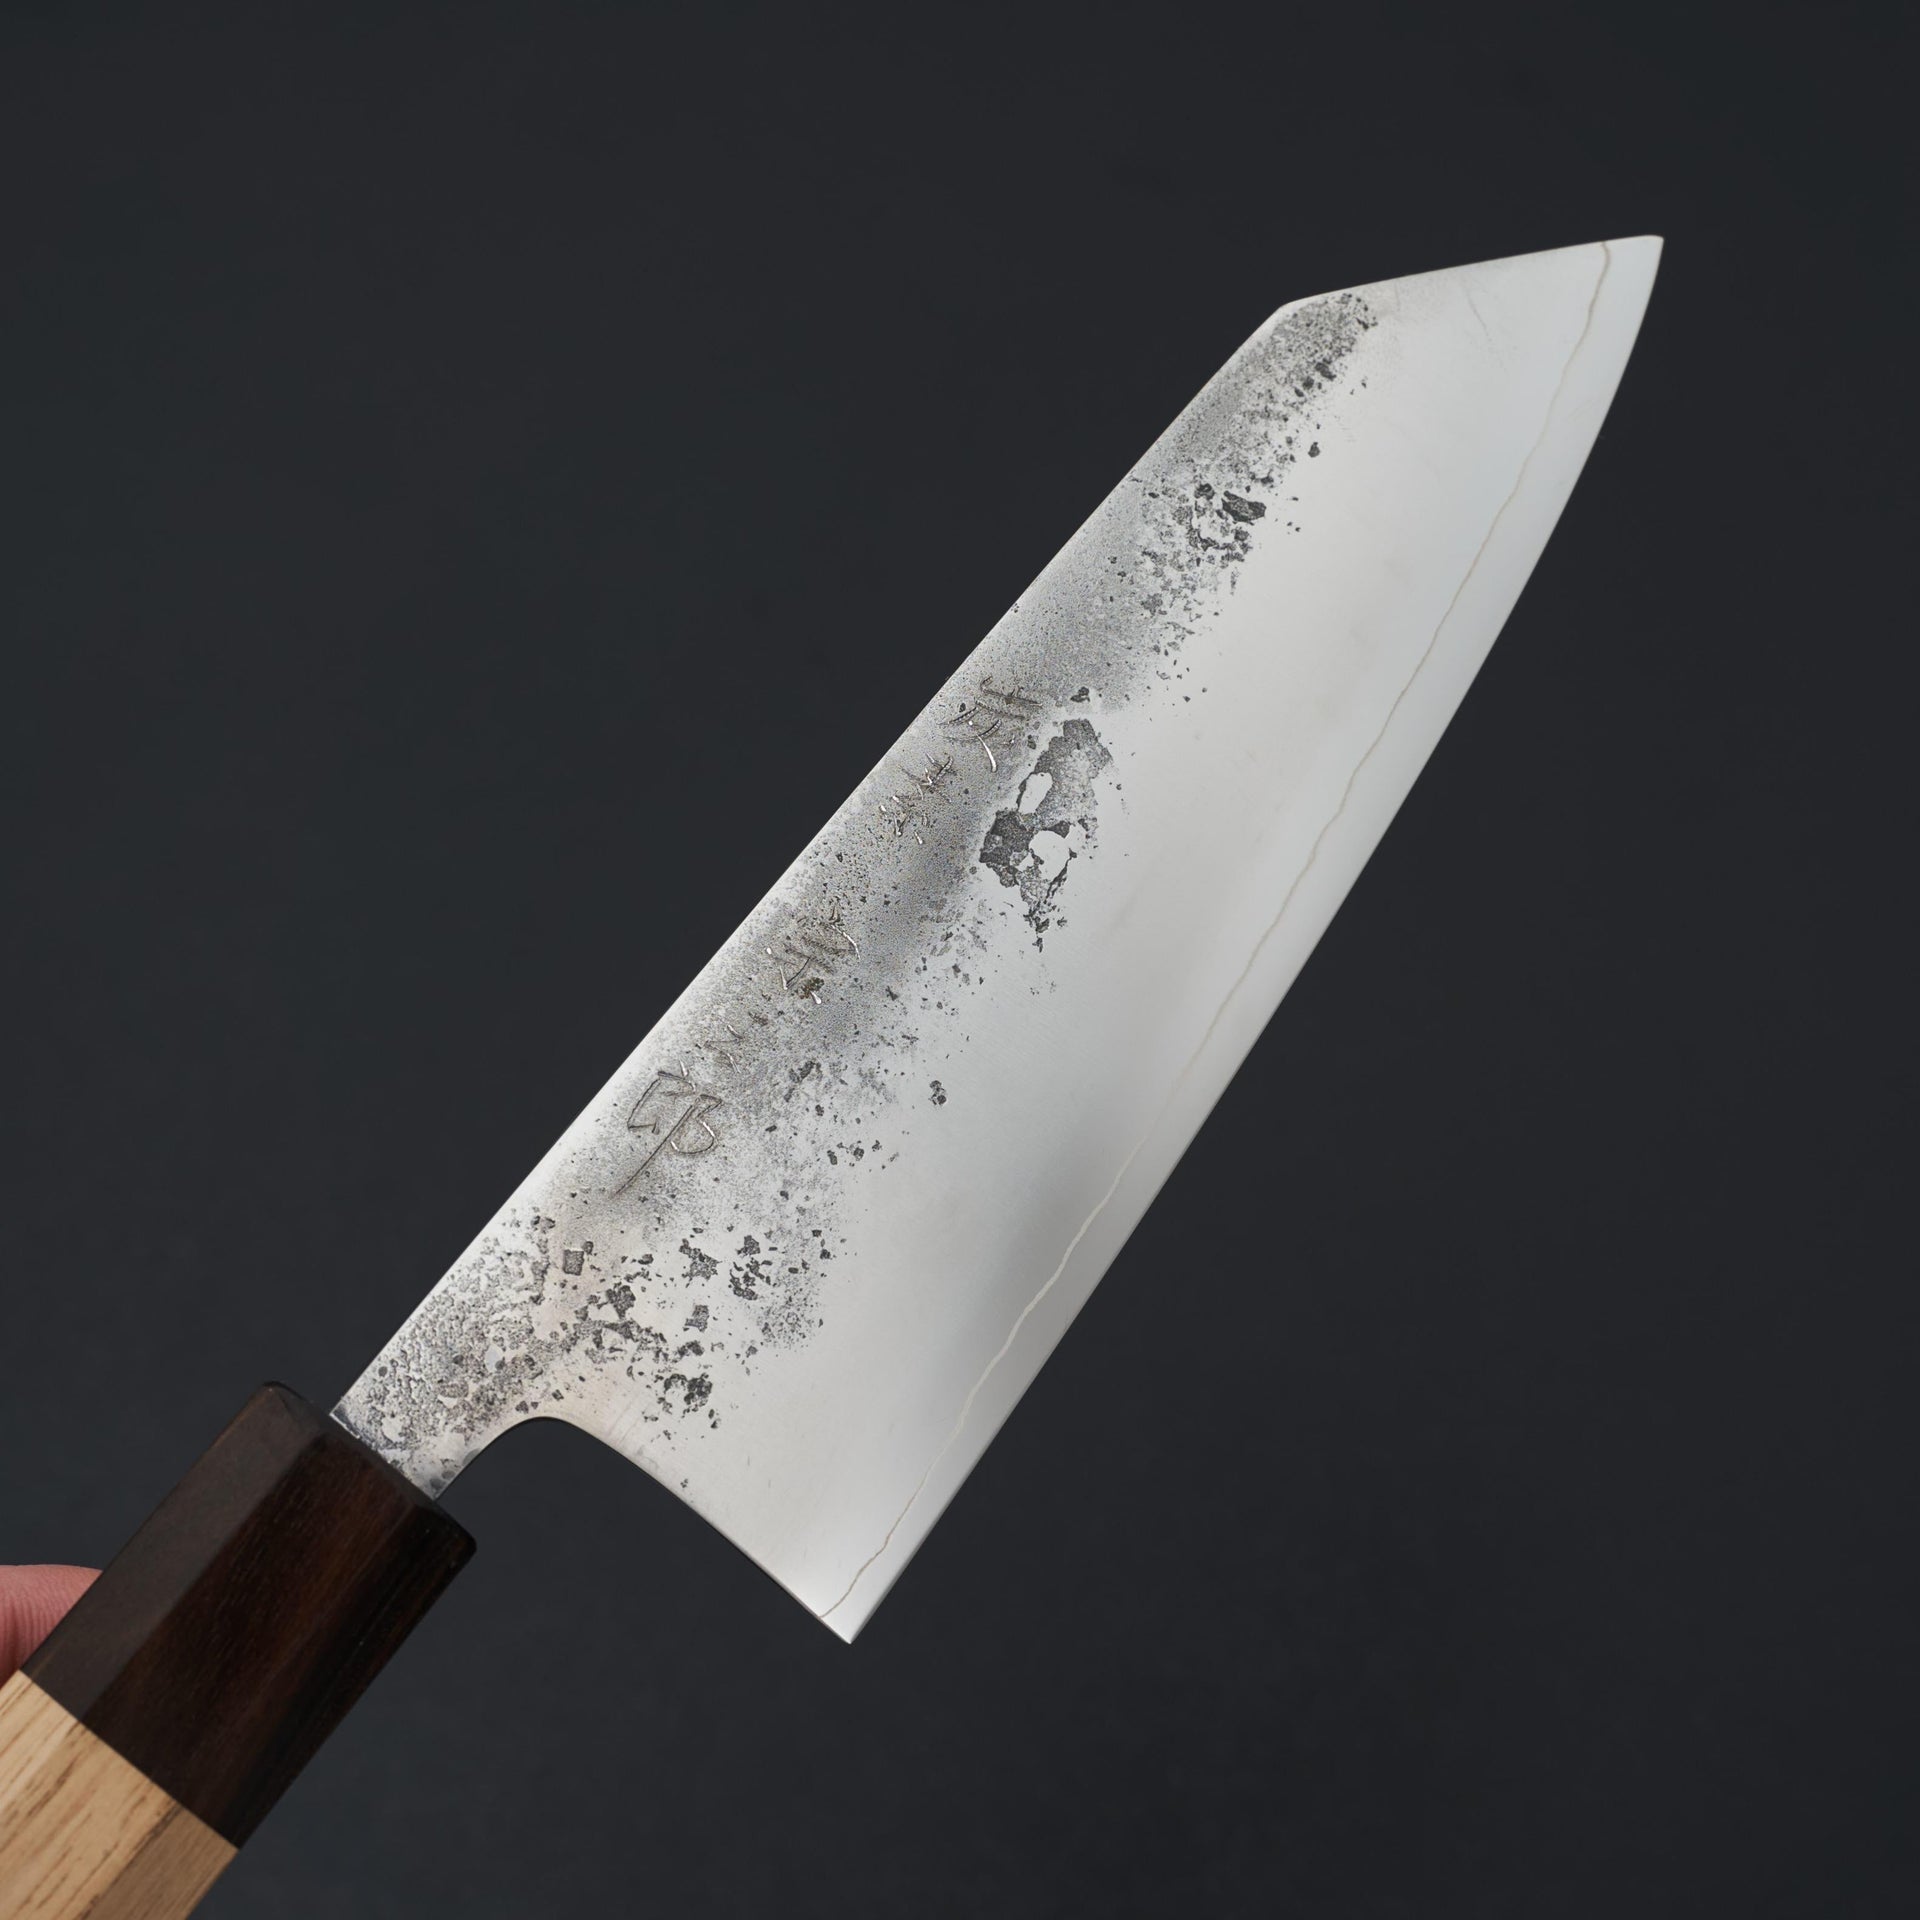 Nihei SLD Nashiji Bunka 165mm-Knife-Nihei-Carbon Knife Co